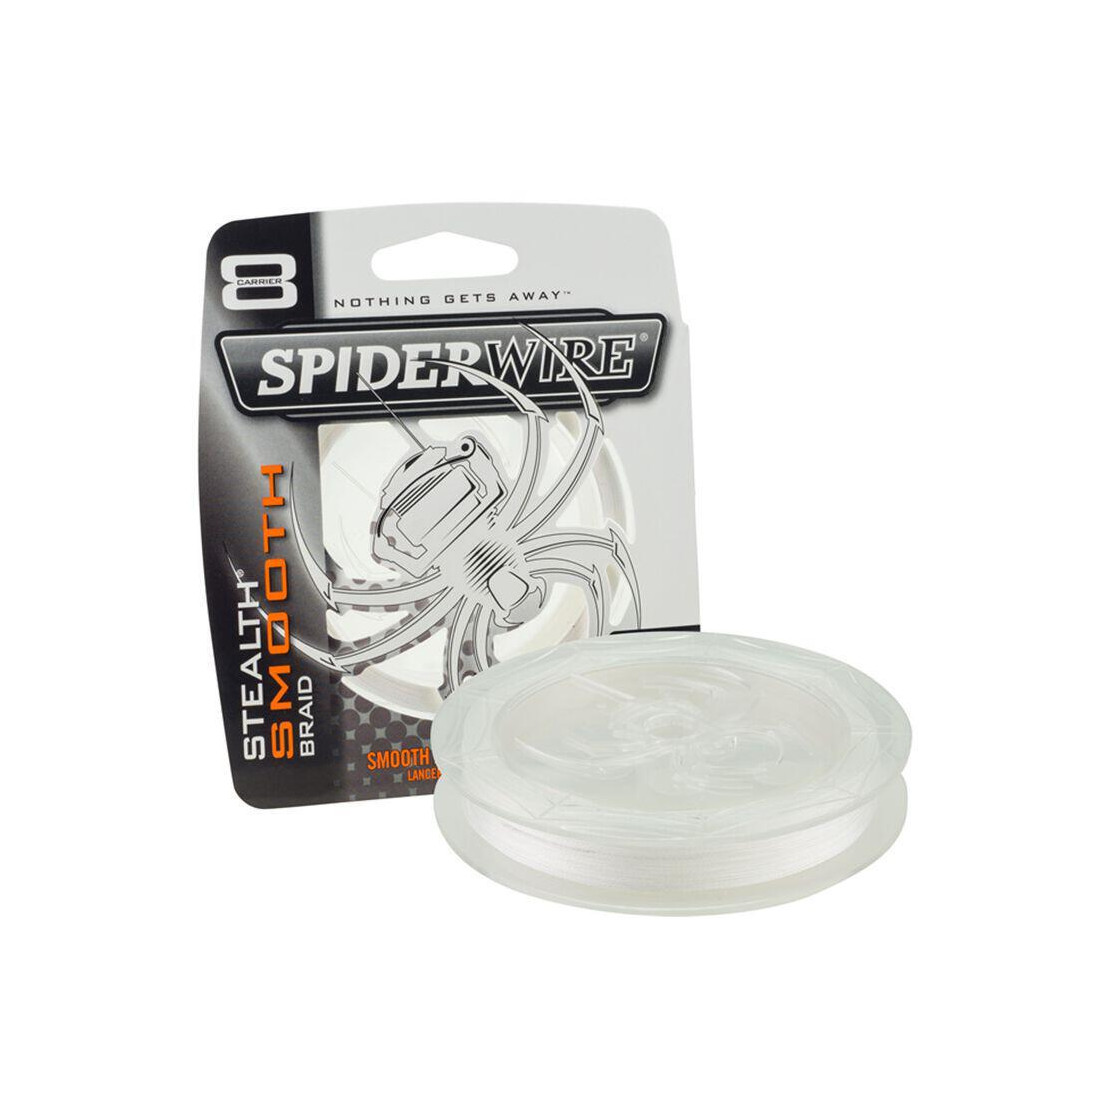 SpiderWire Stealth® Smooth8 x8 PE Braid Blue Camo 0,33 mm 38,1 kg-83 lbs  150 m - Muziker